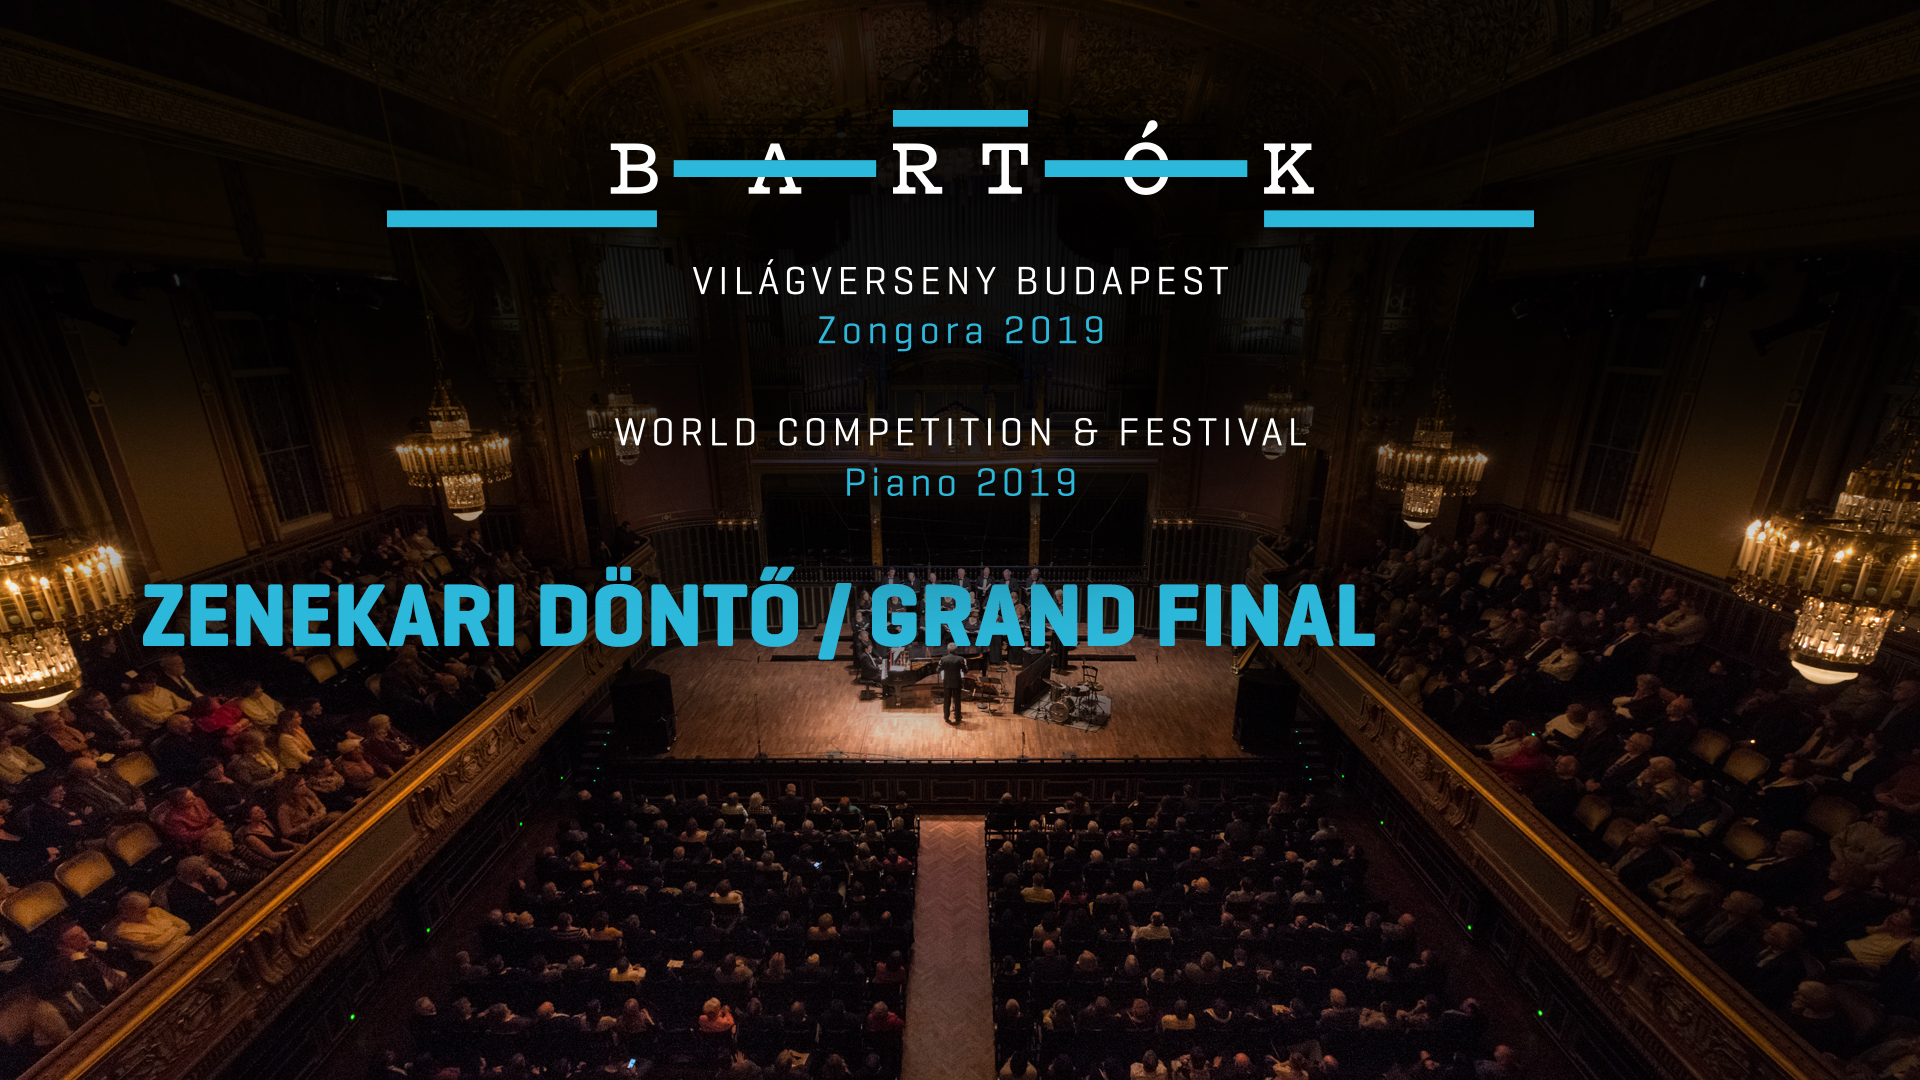 bartók world competition festival piano 2019 all programs